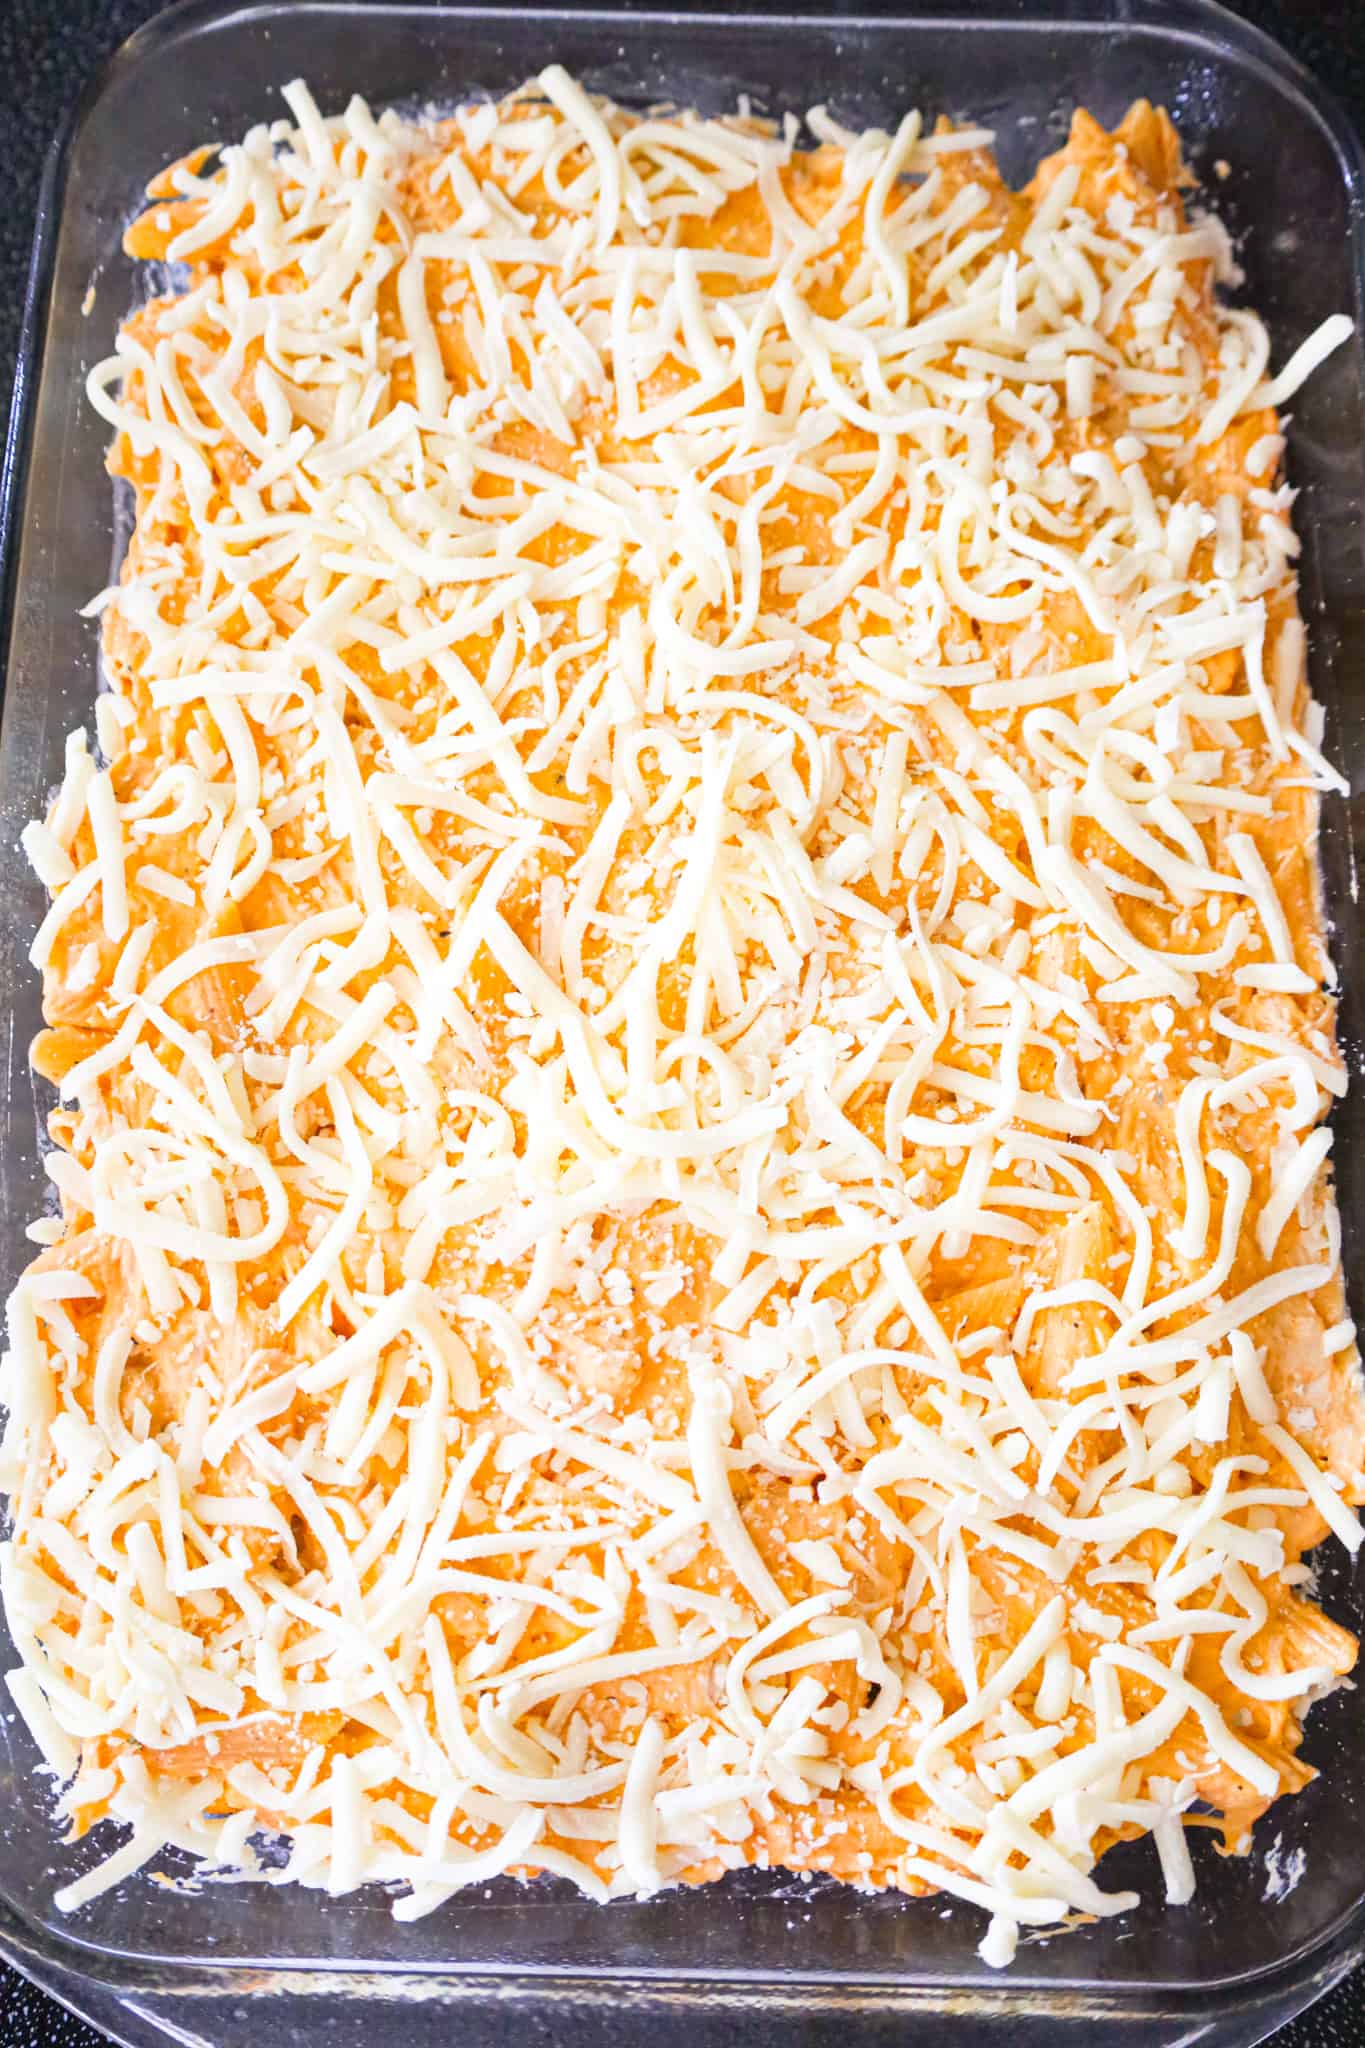 shredded mozzarella cheese on top of buffalo chicken pasta in a baking dish